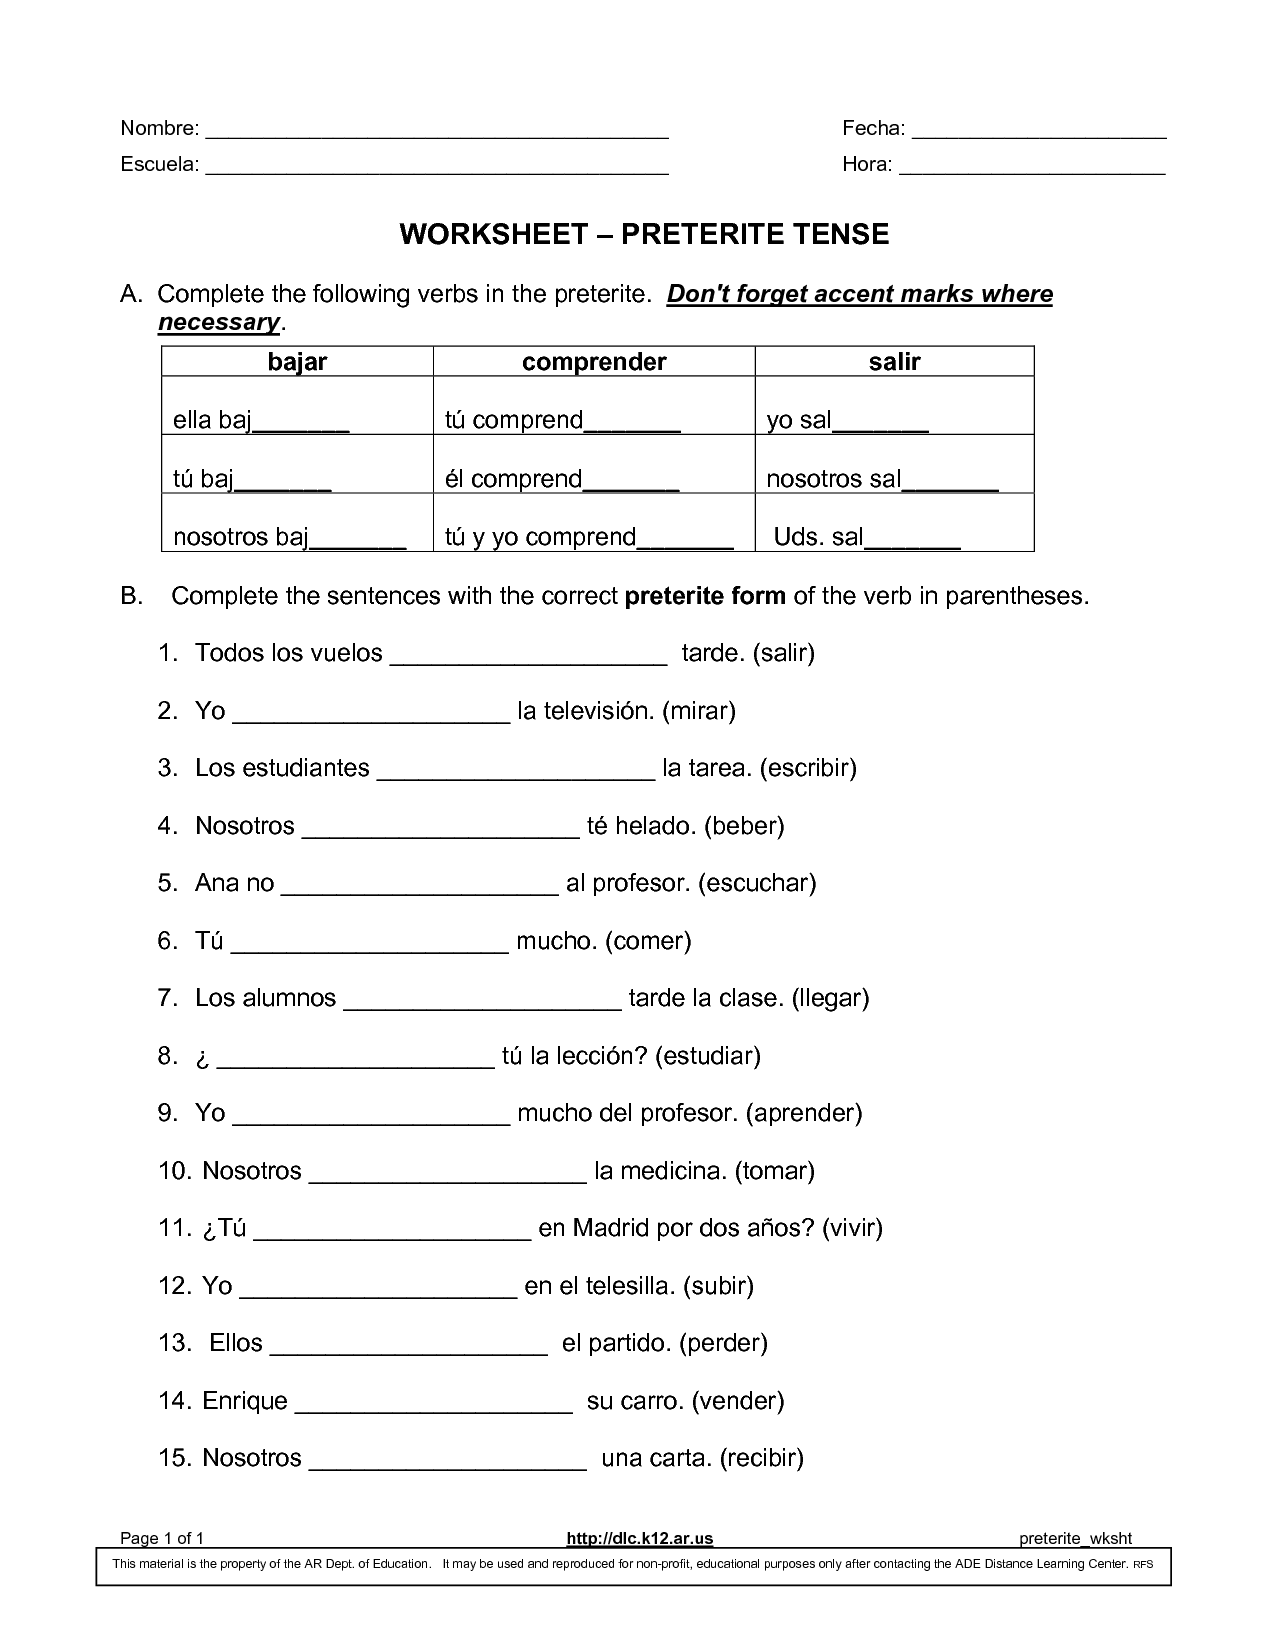 Worksheet 5 5 Preterite Tense Of Oir And Traer